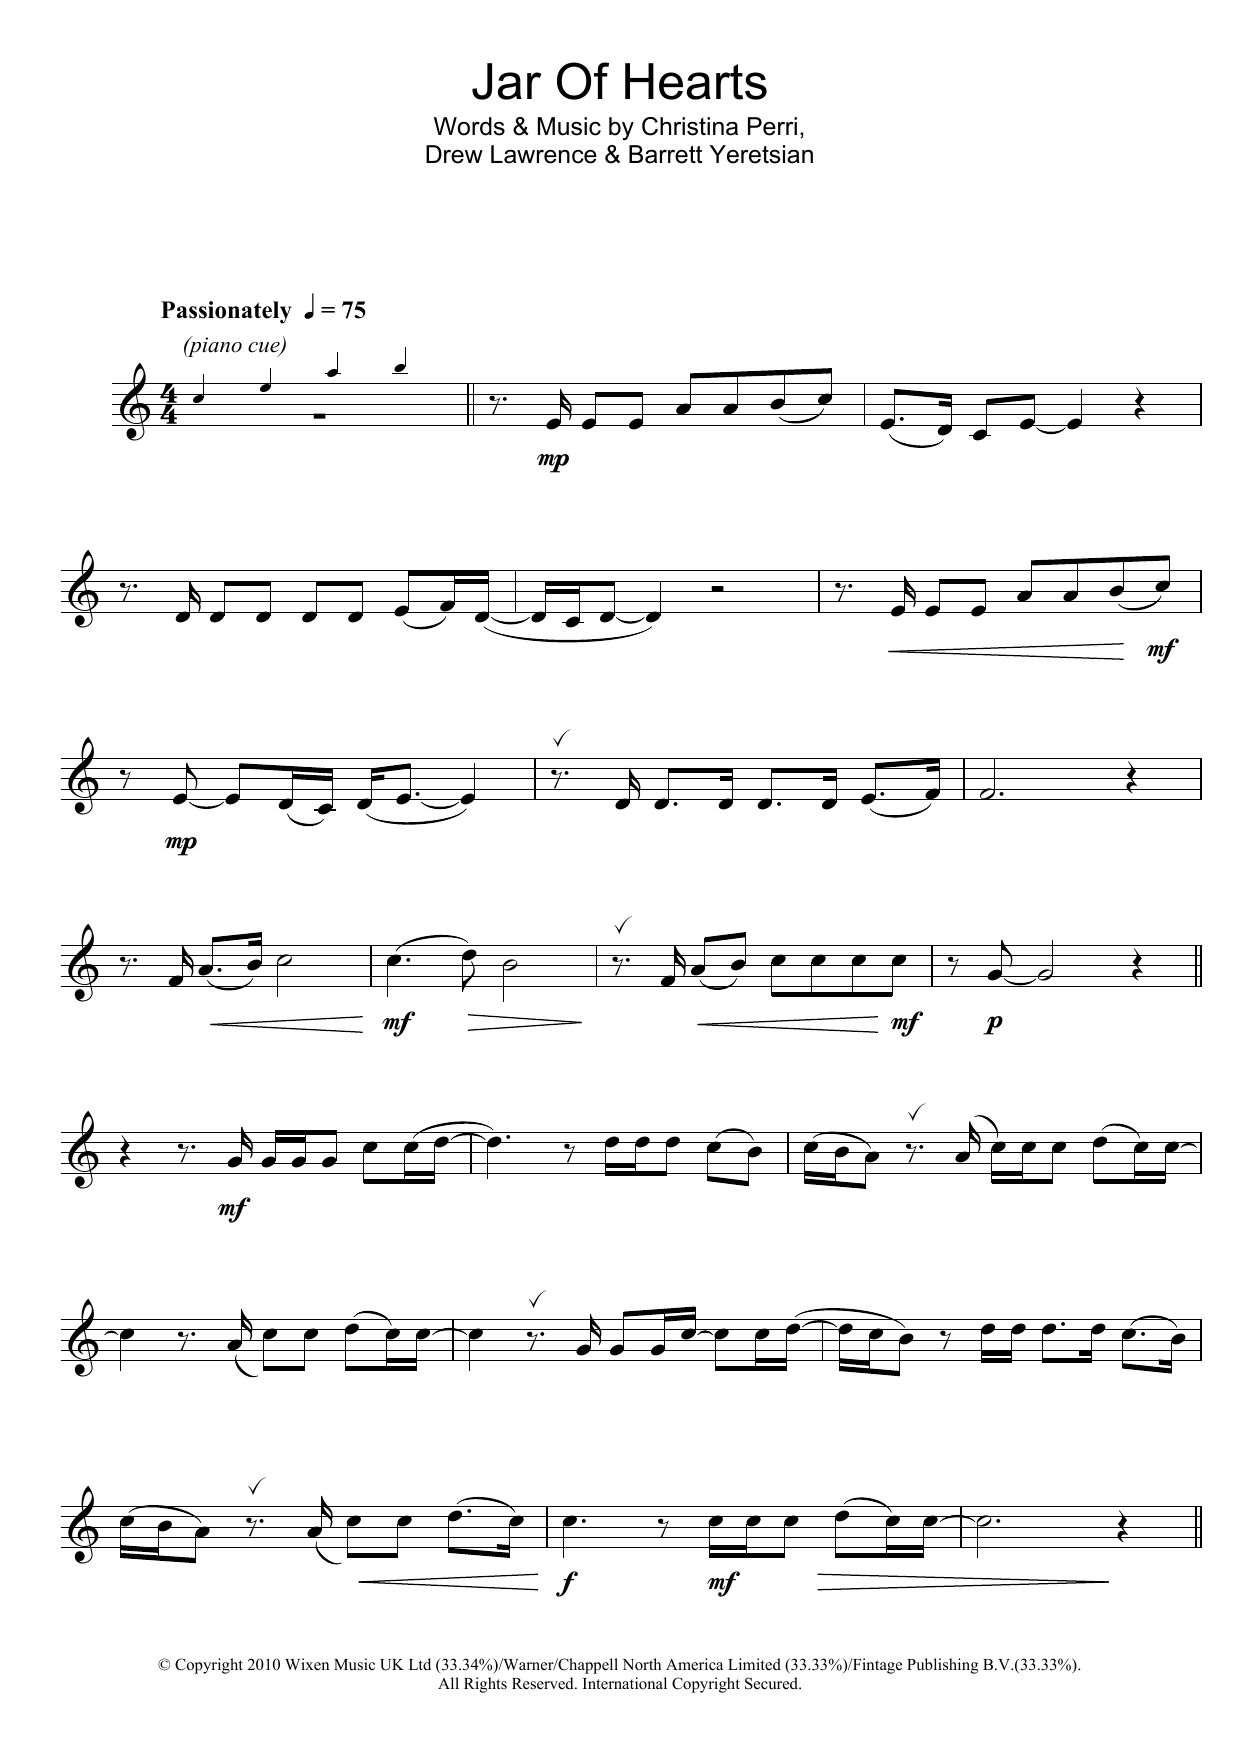 Jar Of Hearts Chords Sheet Music Digital Files To Print Licensed Drew Lawrence Digital